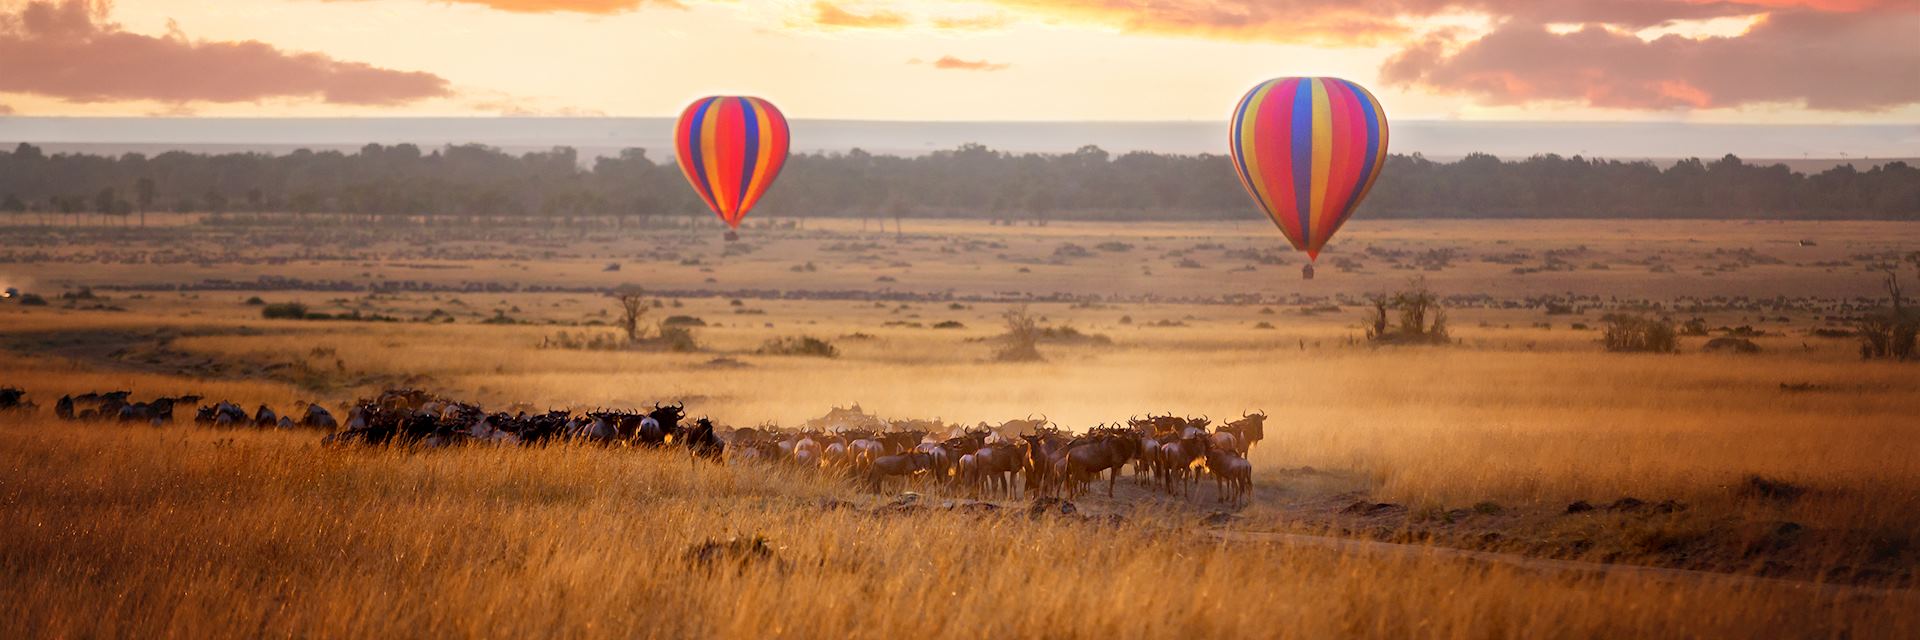 Balloon flight, Masai Mara National Reserve, Kenya